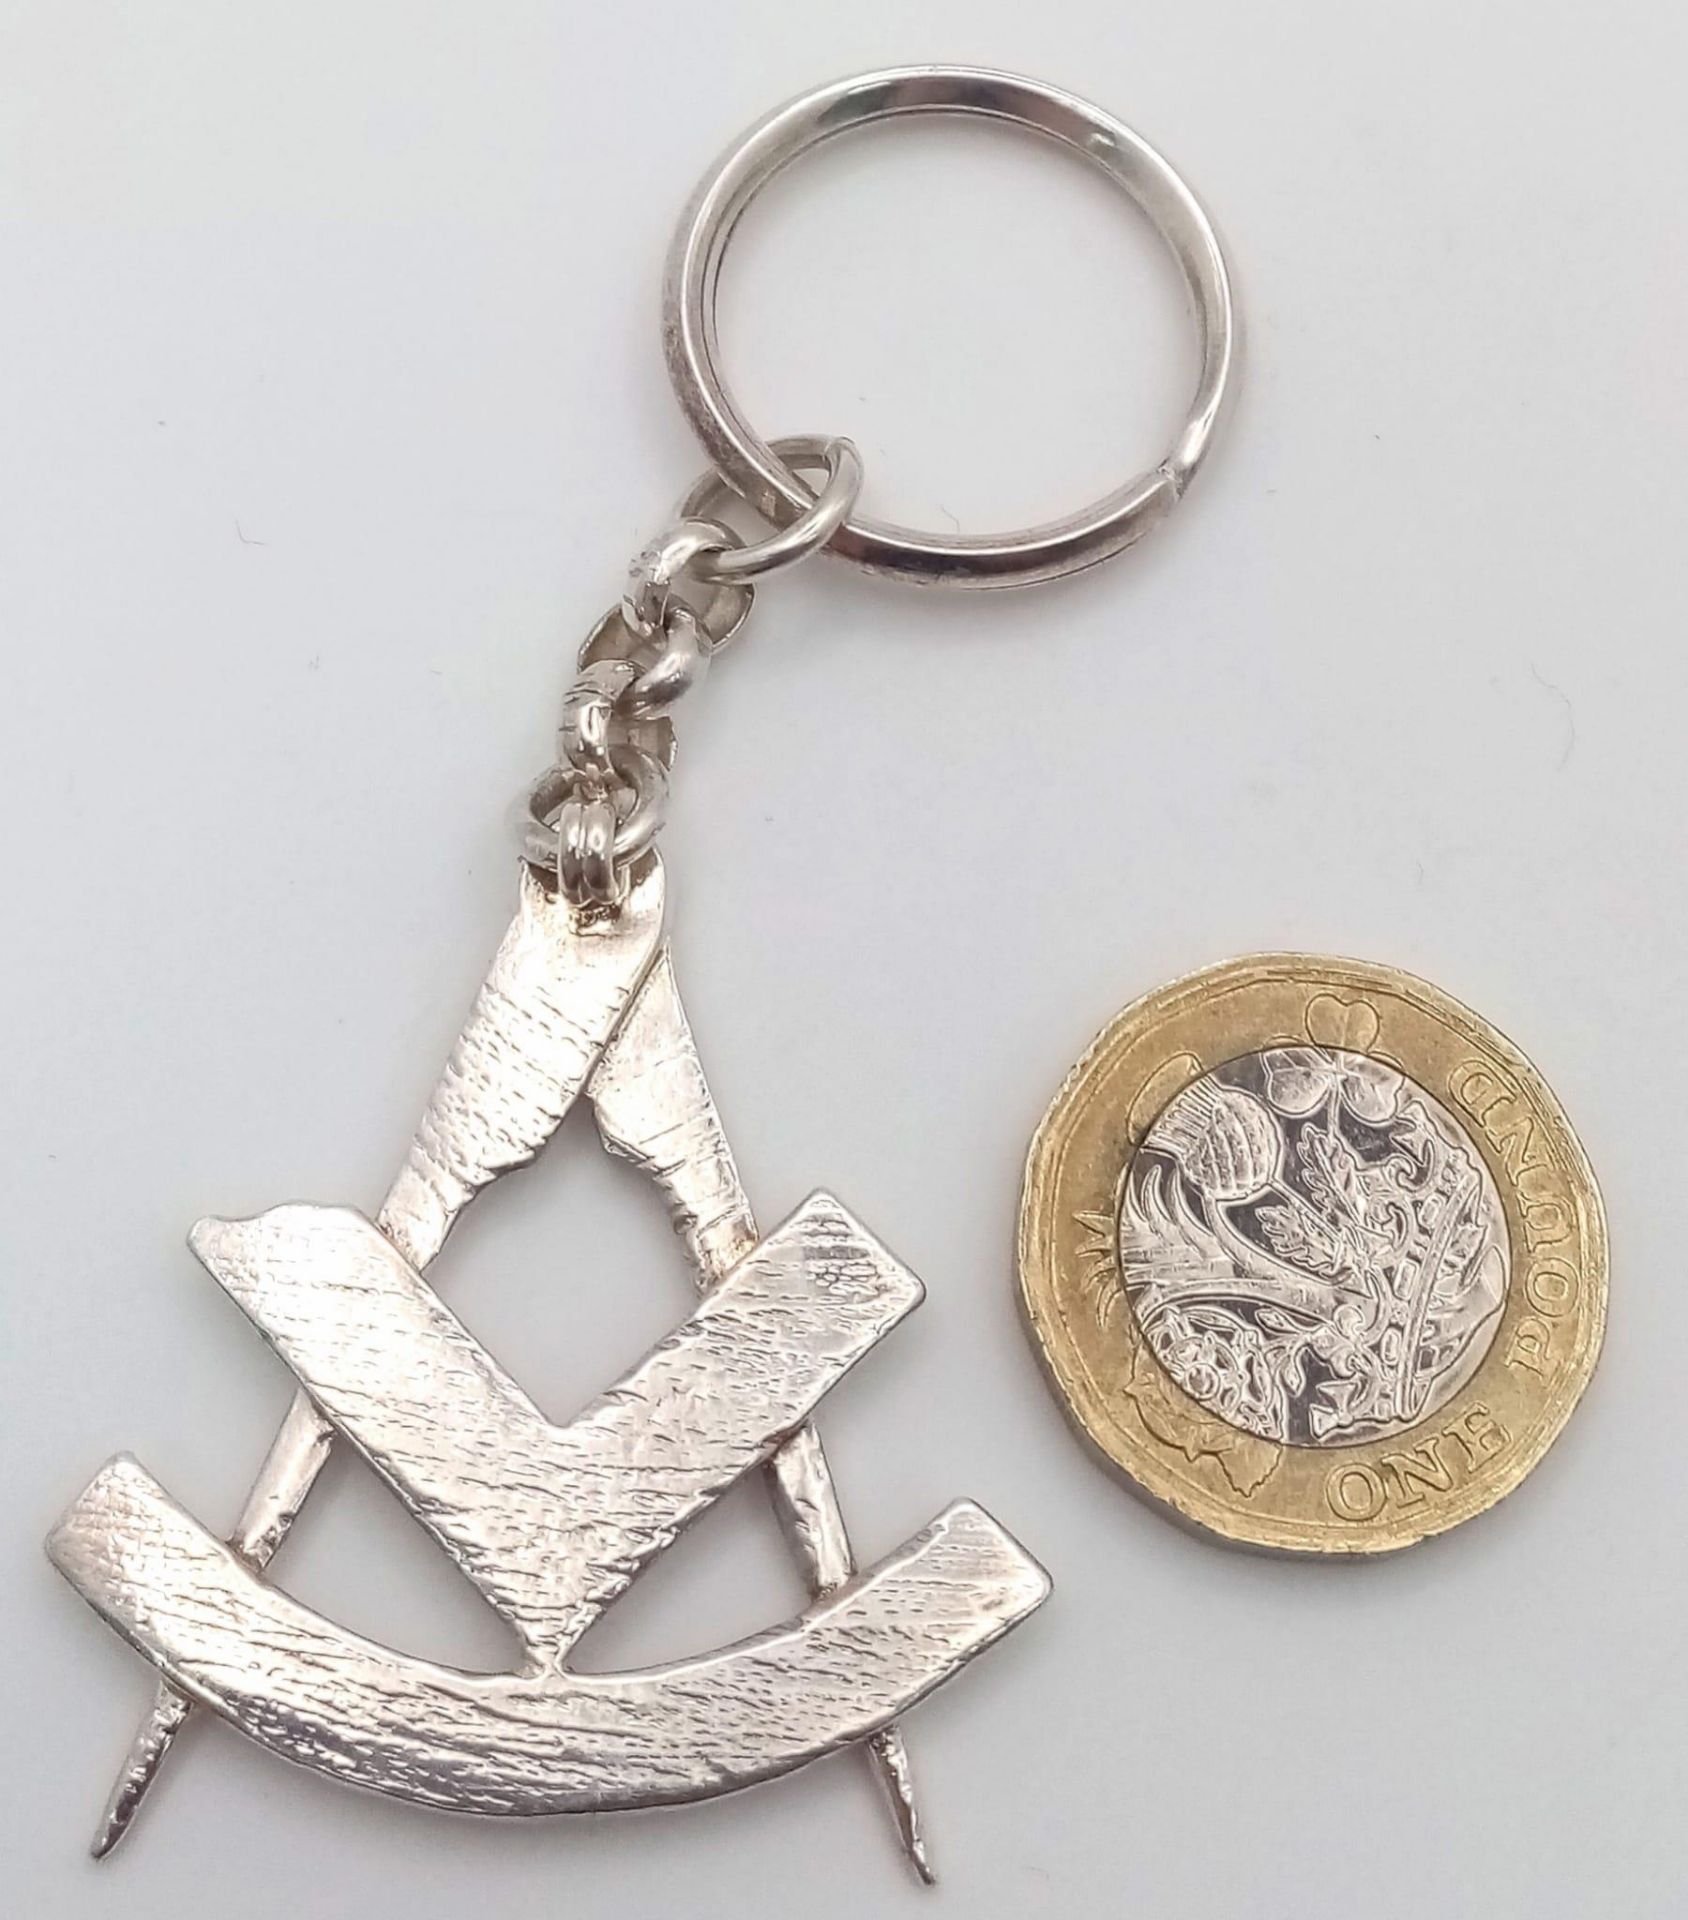 A Masonic Symbol Sterling Silver Key Chain. 6cm x 4cm. 15g - Image 3 of 3